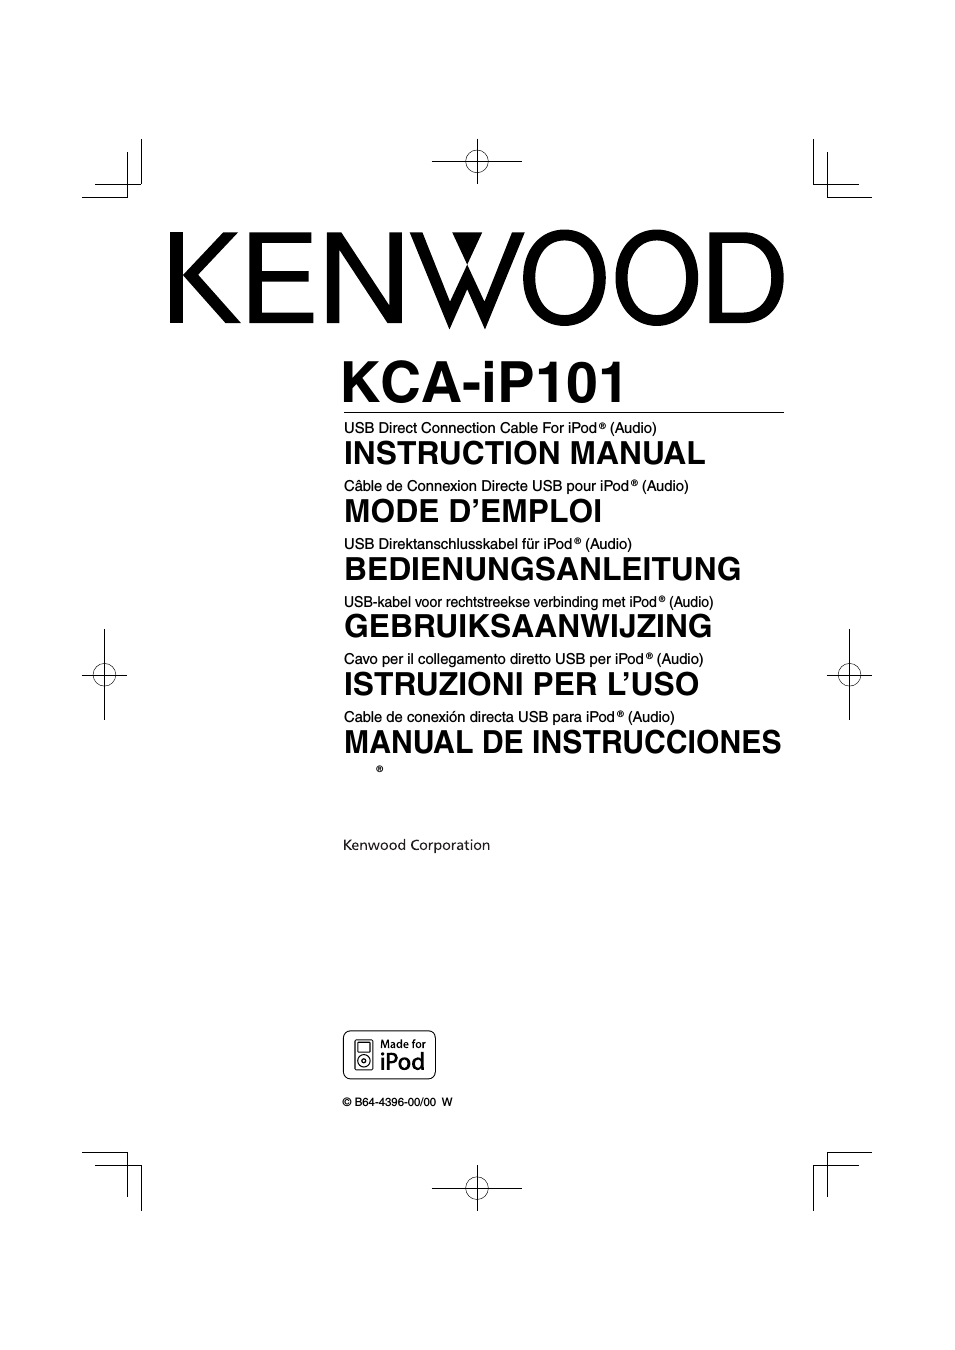 KCA-iP101